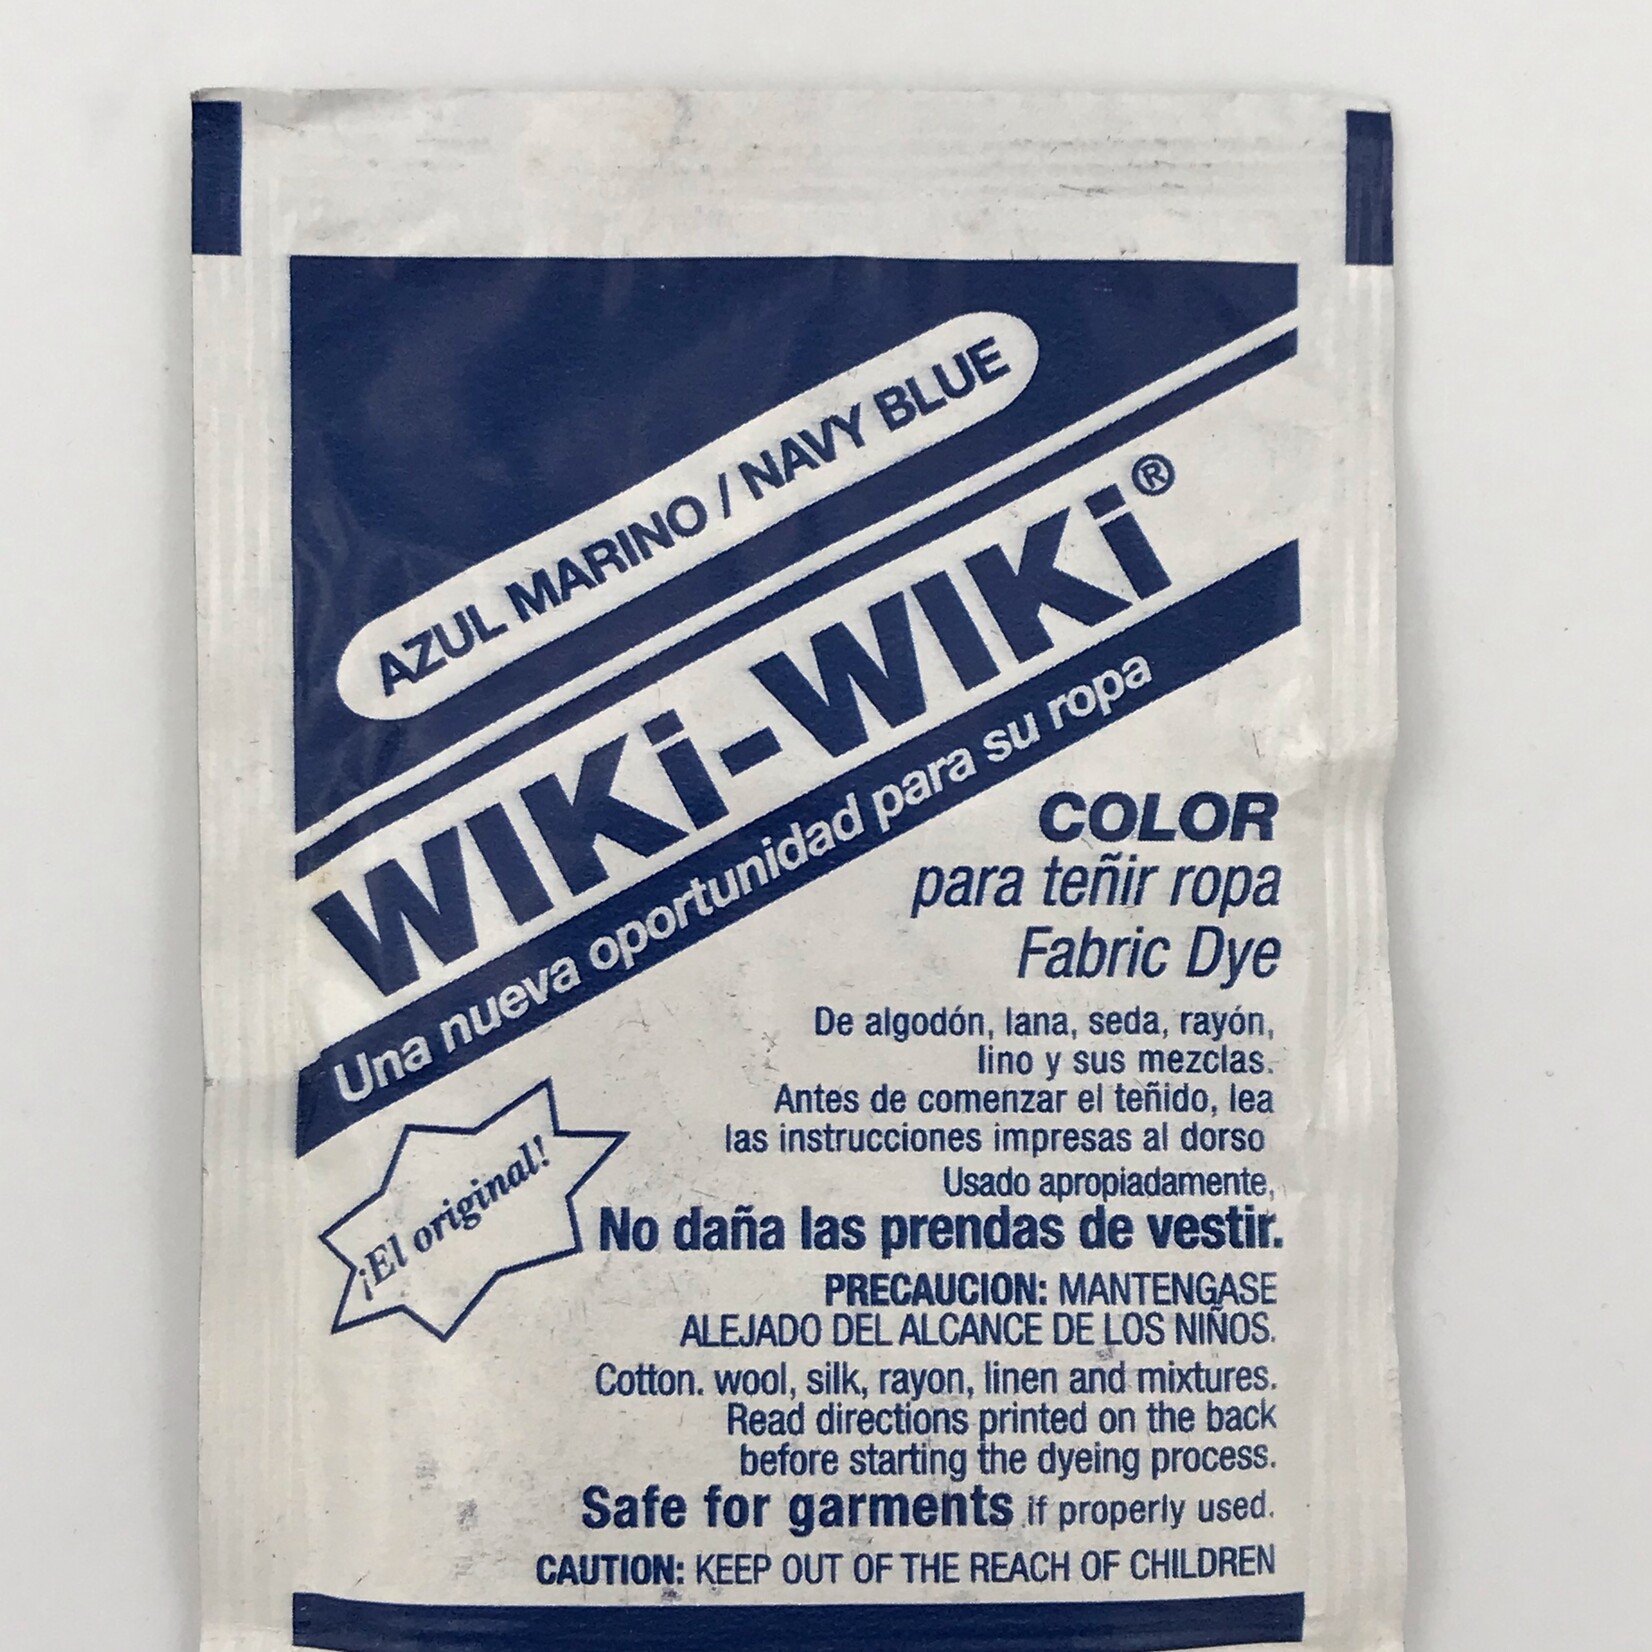 Wiki-Wiki Fabric Dye Navy blue